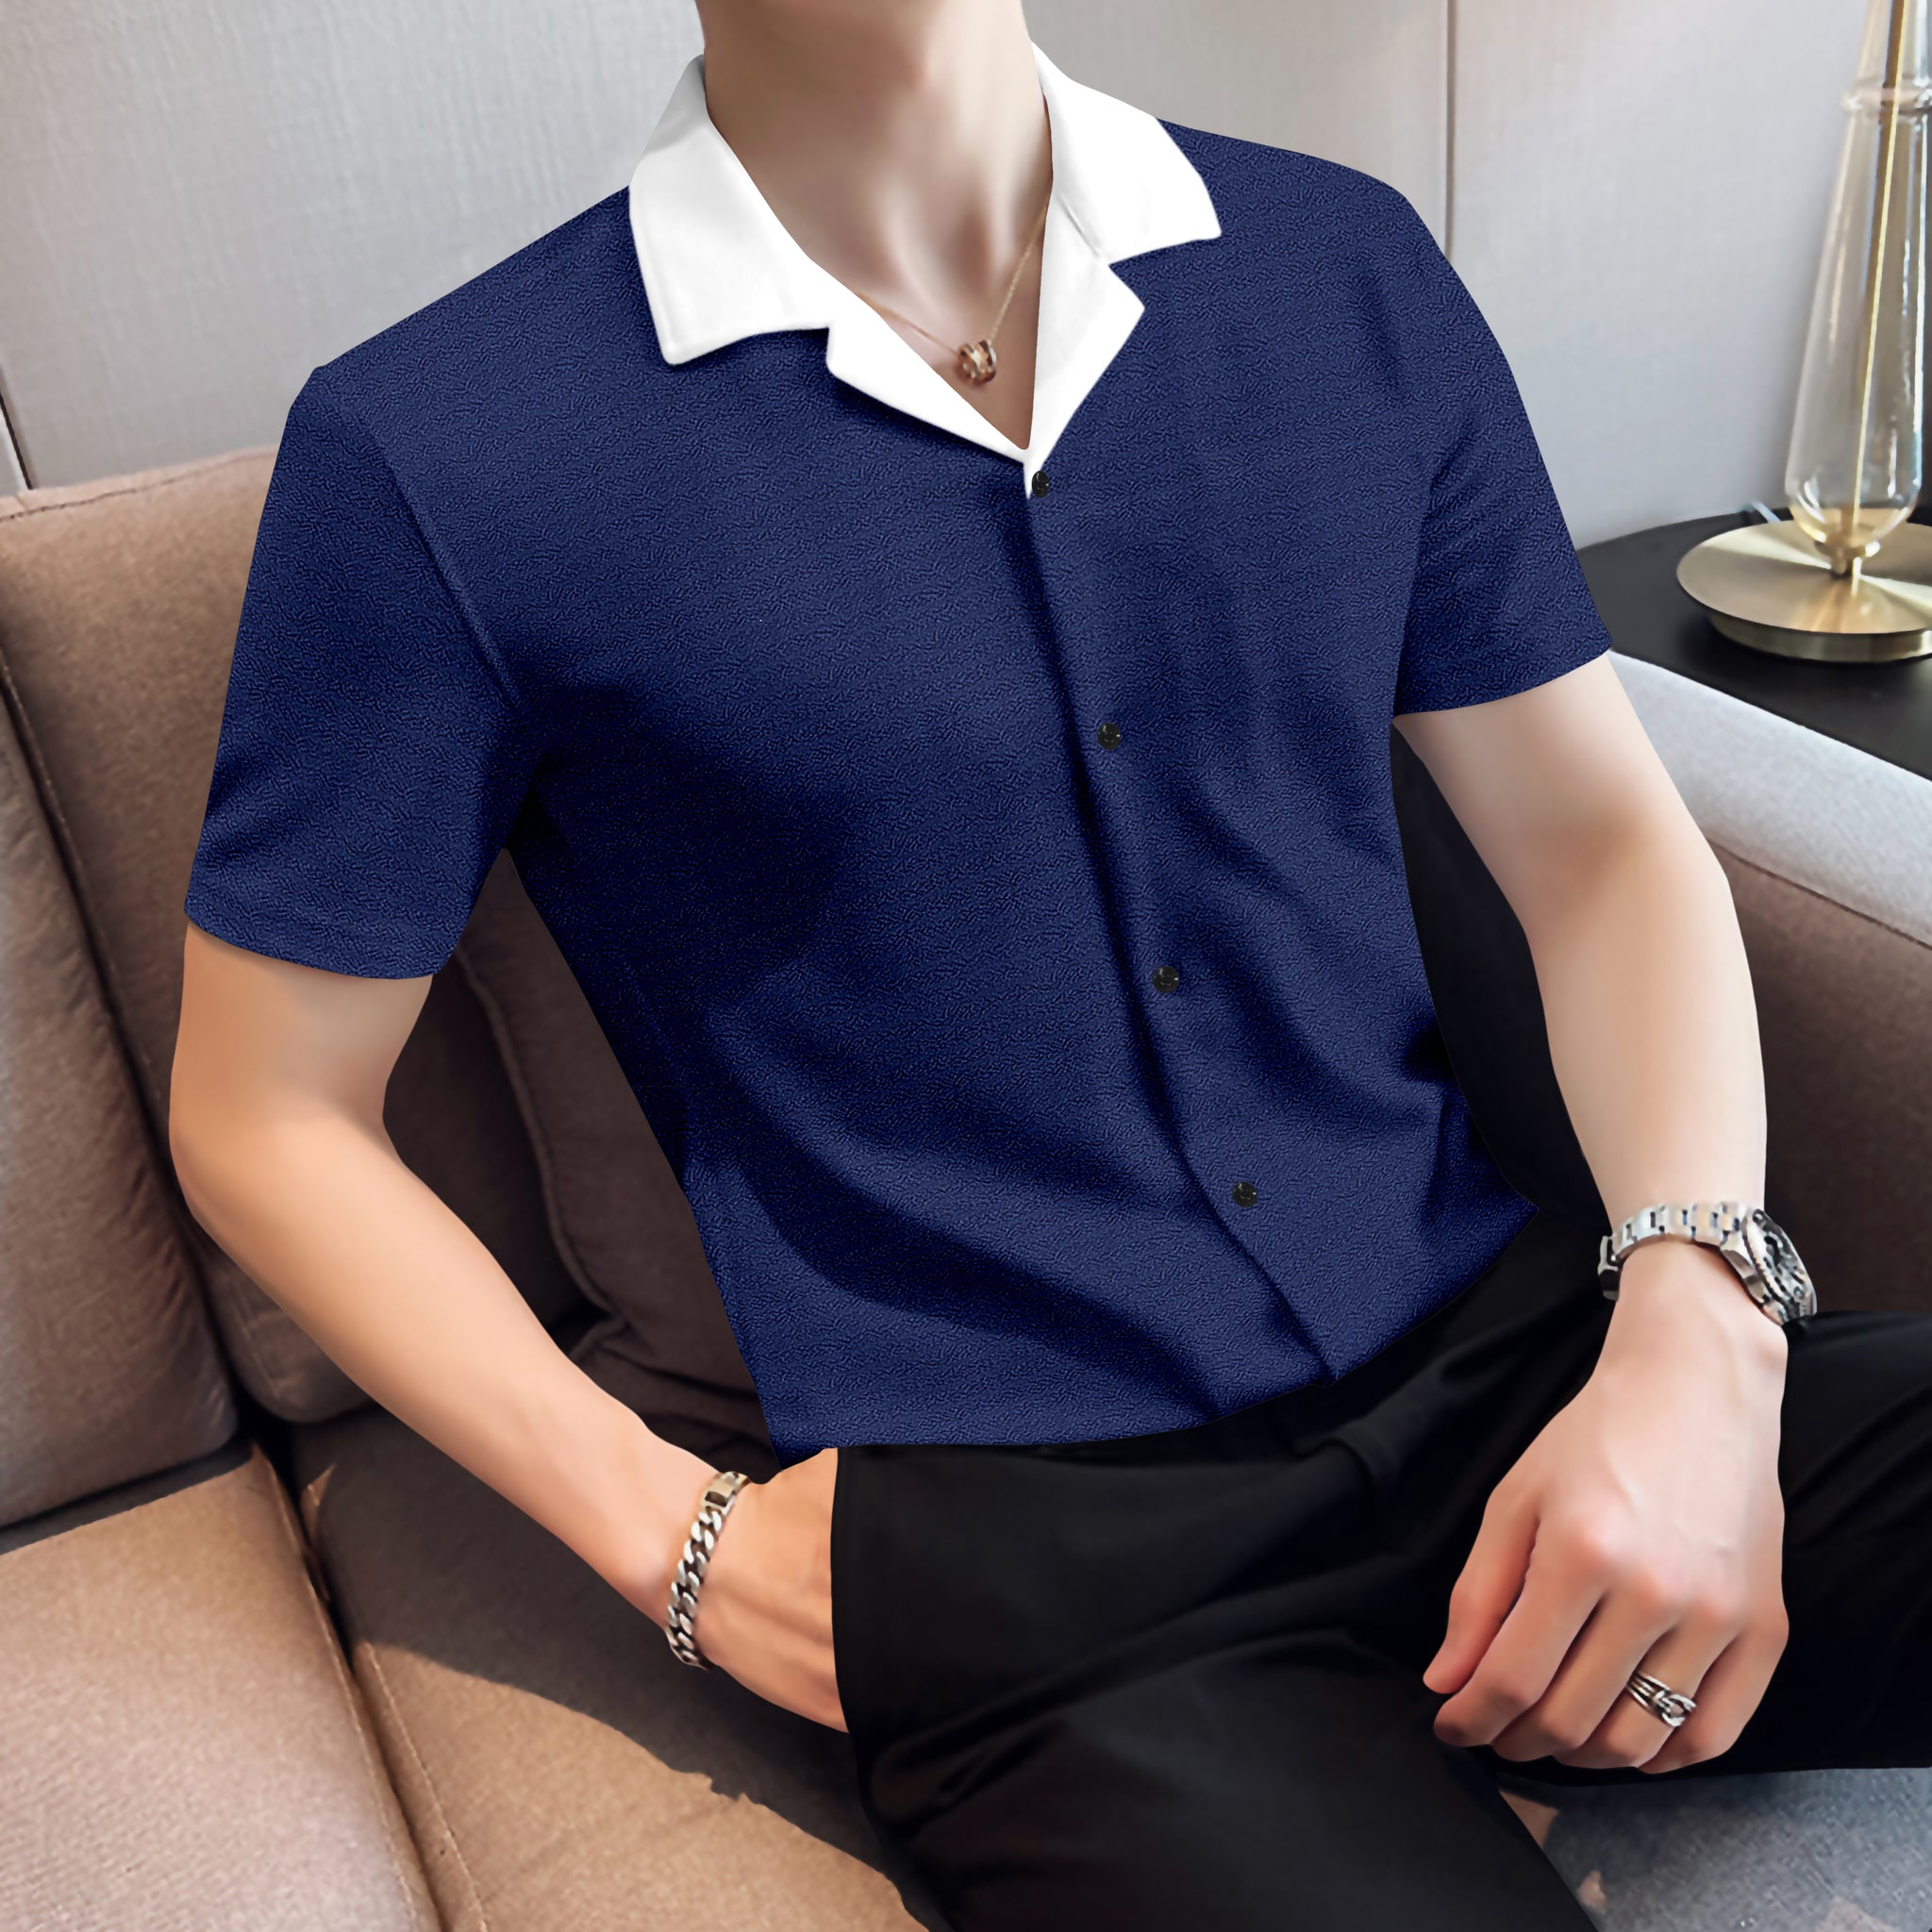 Premium Blue Shirt With White Revere Collar